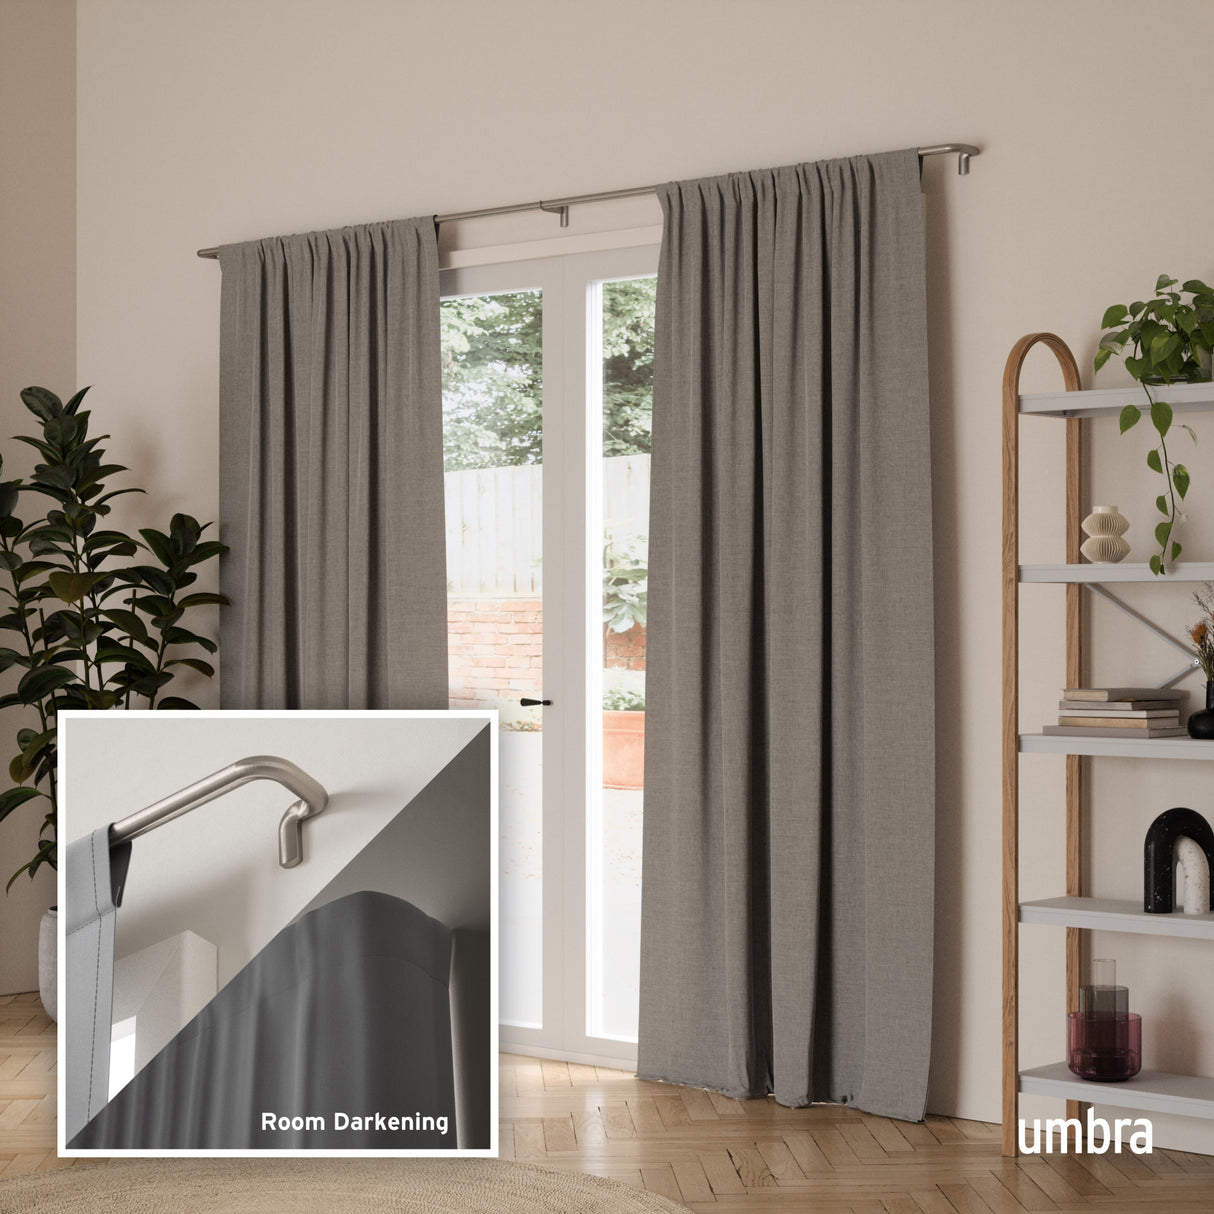 Single Curtain Rods | color: Matte-Nickel | size: 30-84" (76-213 cm) | diameter: 3/4" (1.9 cm)